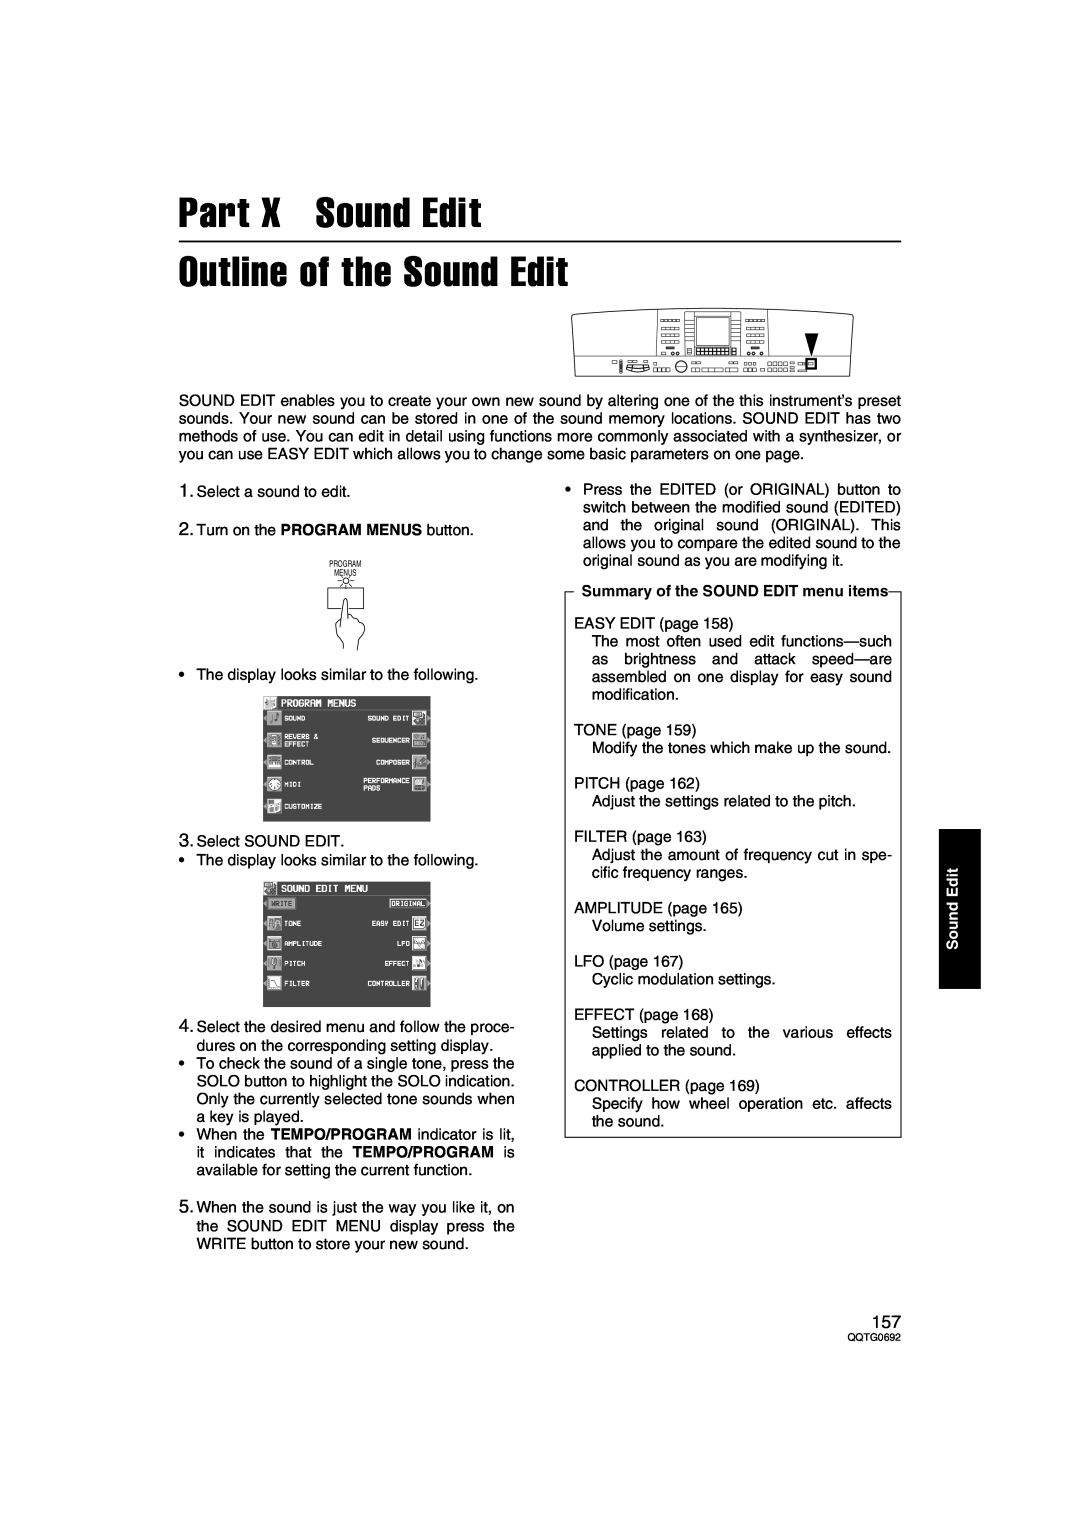 Panasonic SX-KN2400, SX-KN2600 manual Part X Sound Edit Outline of the Sound Edit, Summary of the SOUND EDIT menu items 